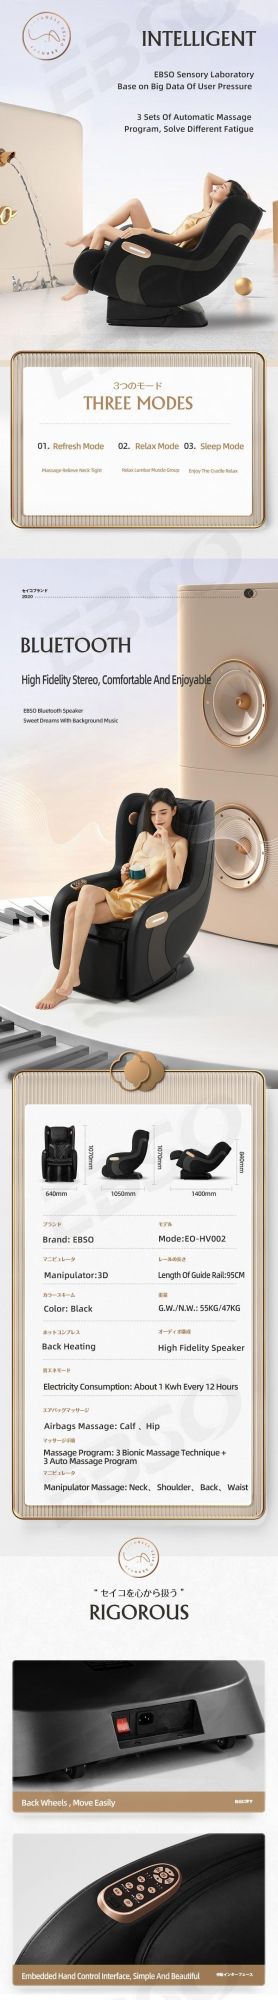 Ksm-Mc1 4D Body Massage Chair for Wheelchair People Shiatsu SL Track 0 Gravity Full Body Airbag Massage Chair